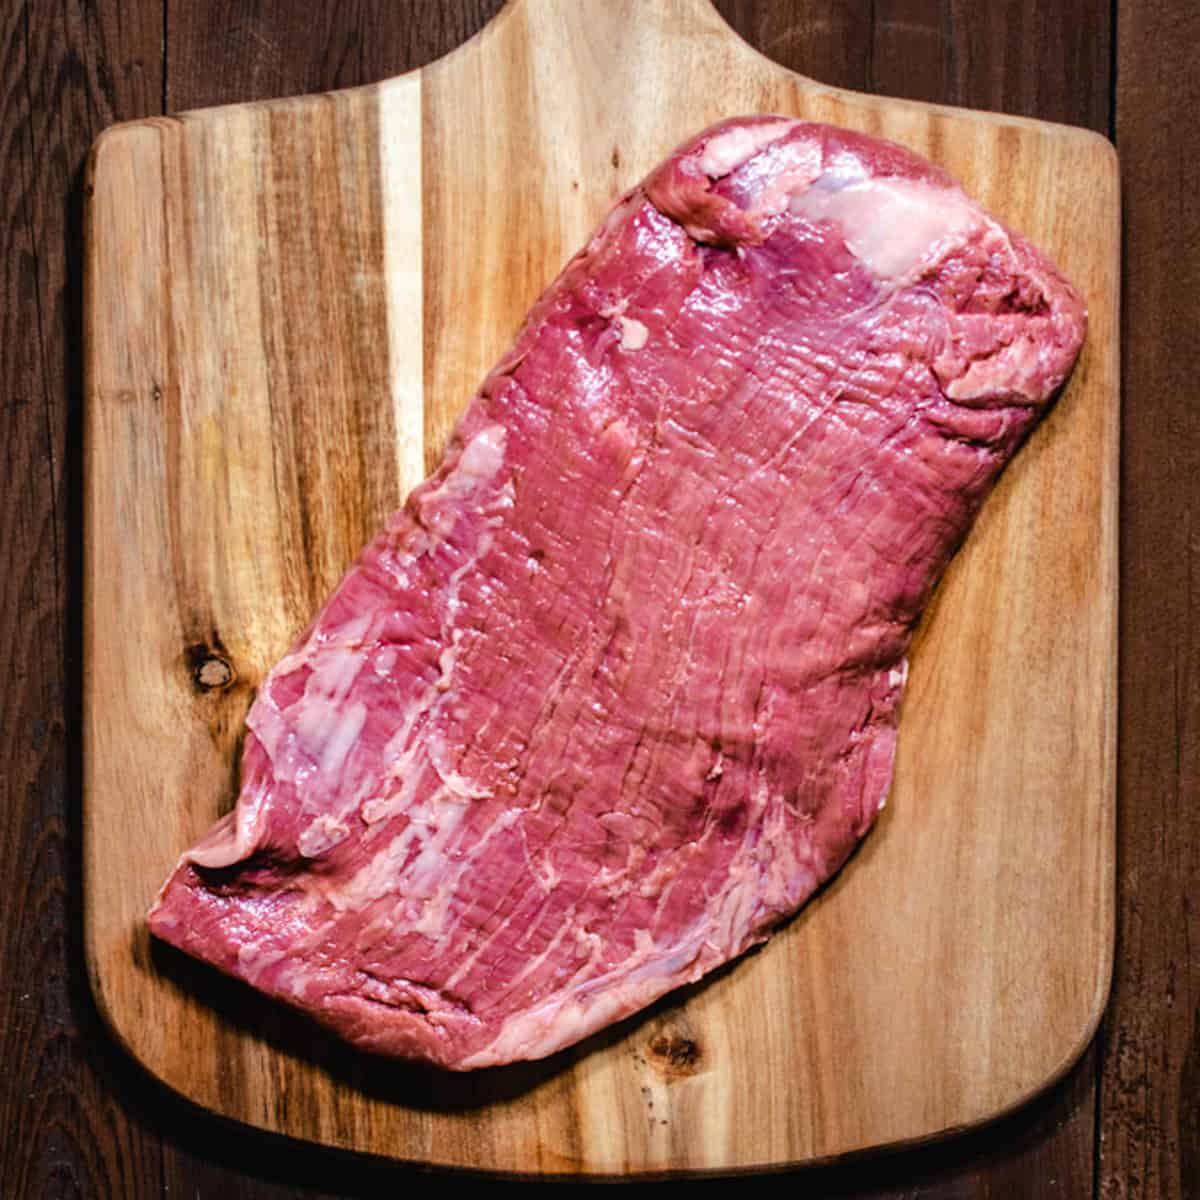 raw, whole flank steak on a wood board.